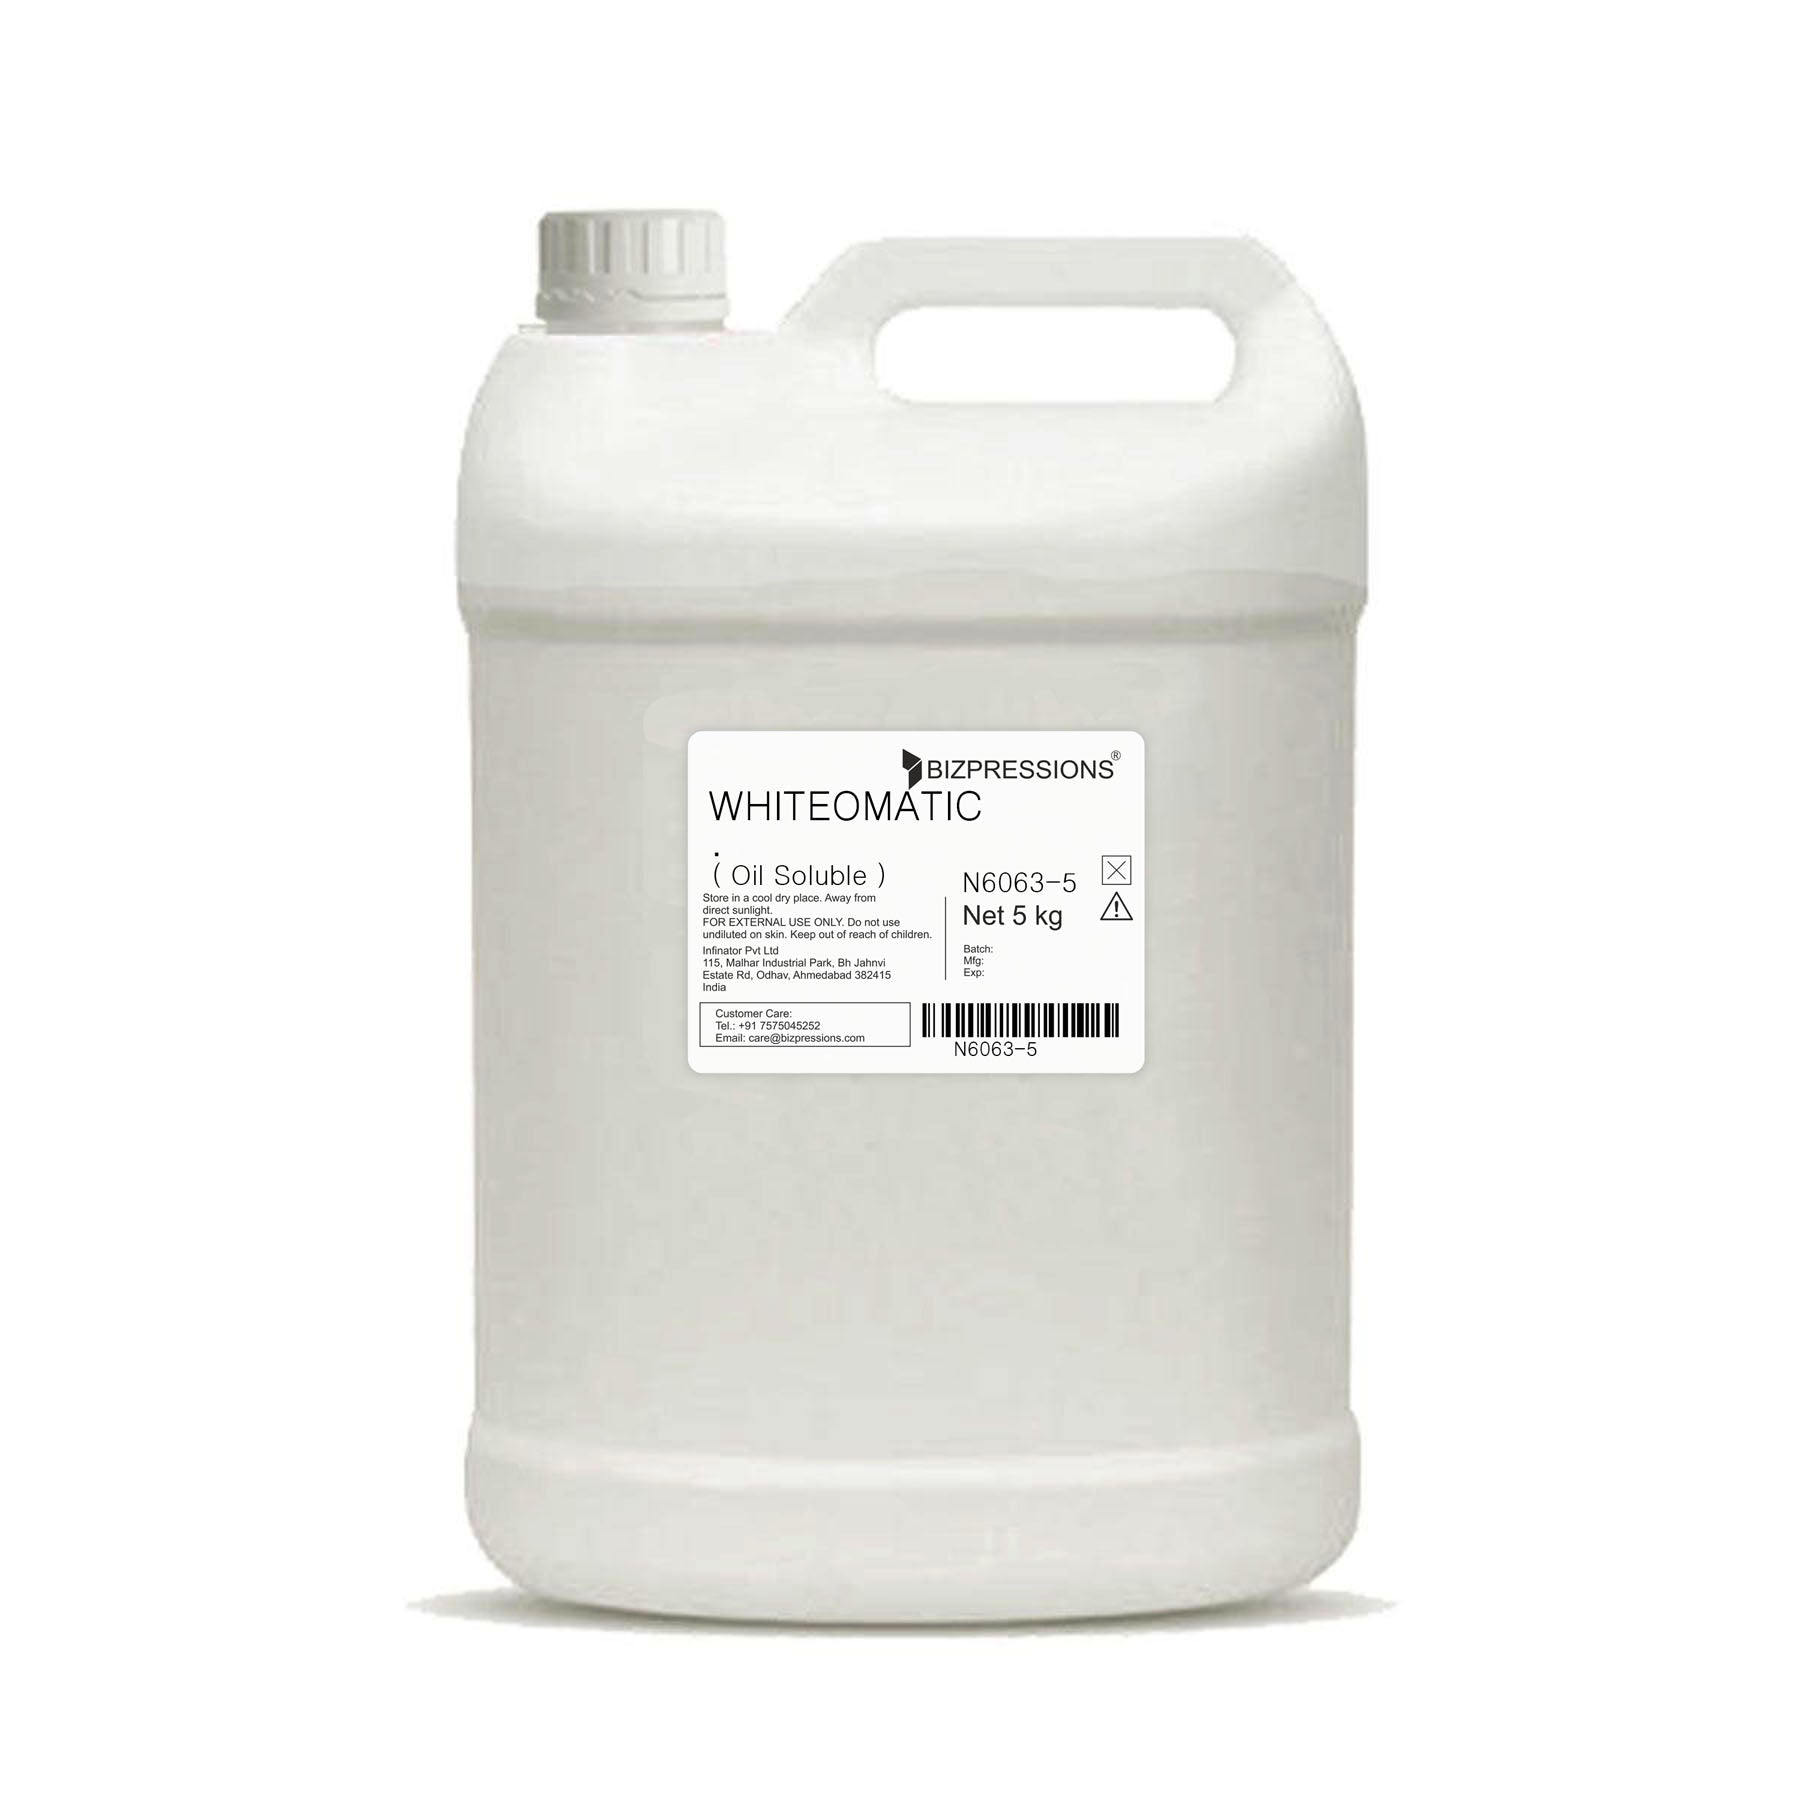 WHITEOMATIC - Fragrance ( Oil Soluble ) - 5 kg